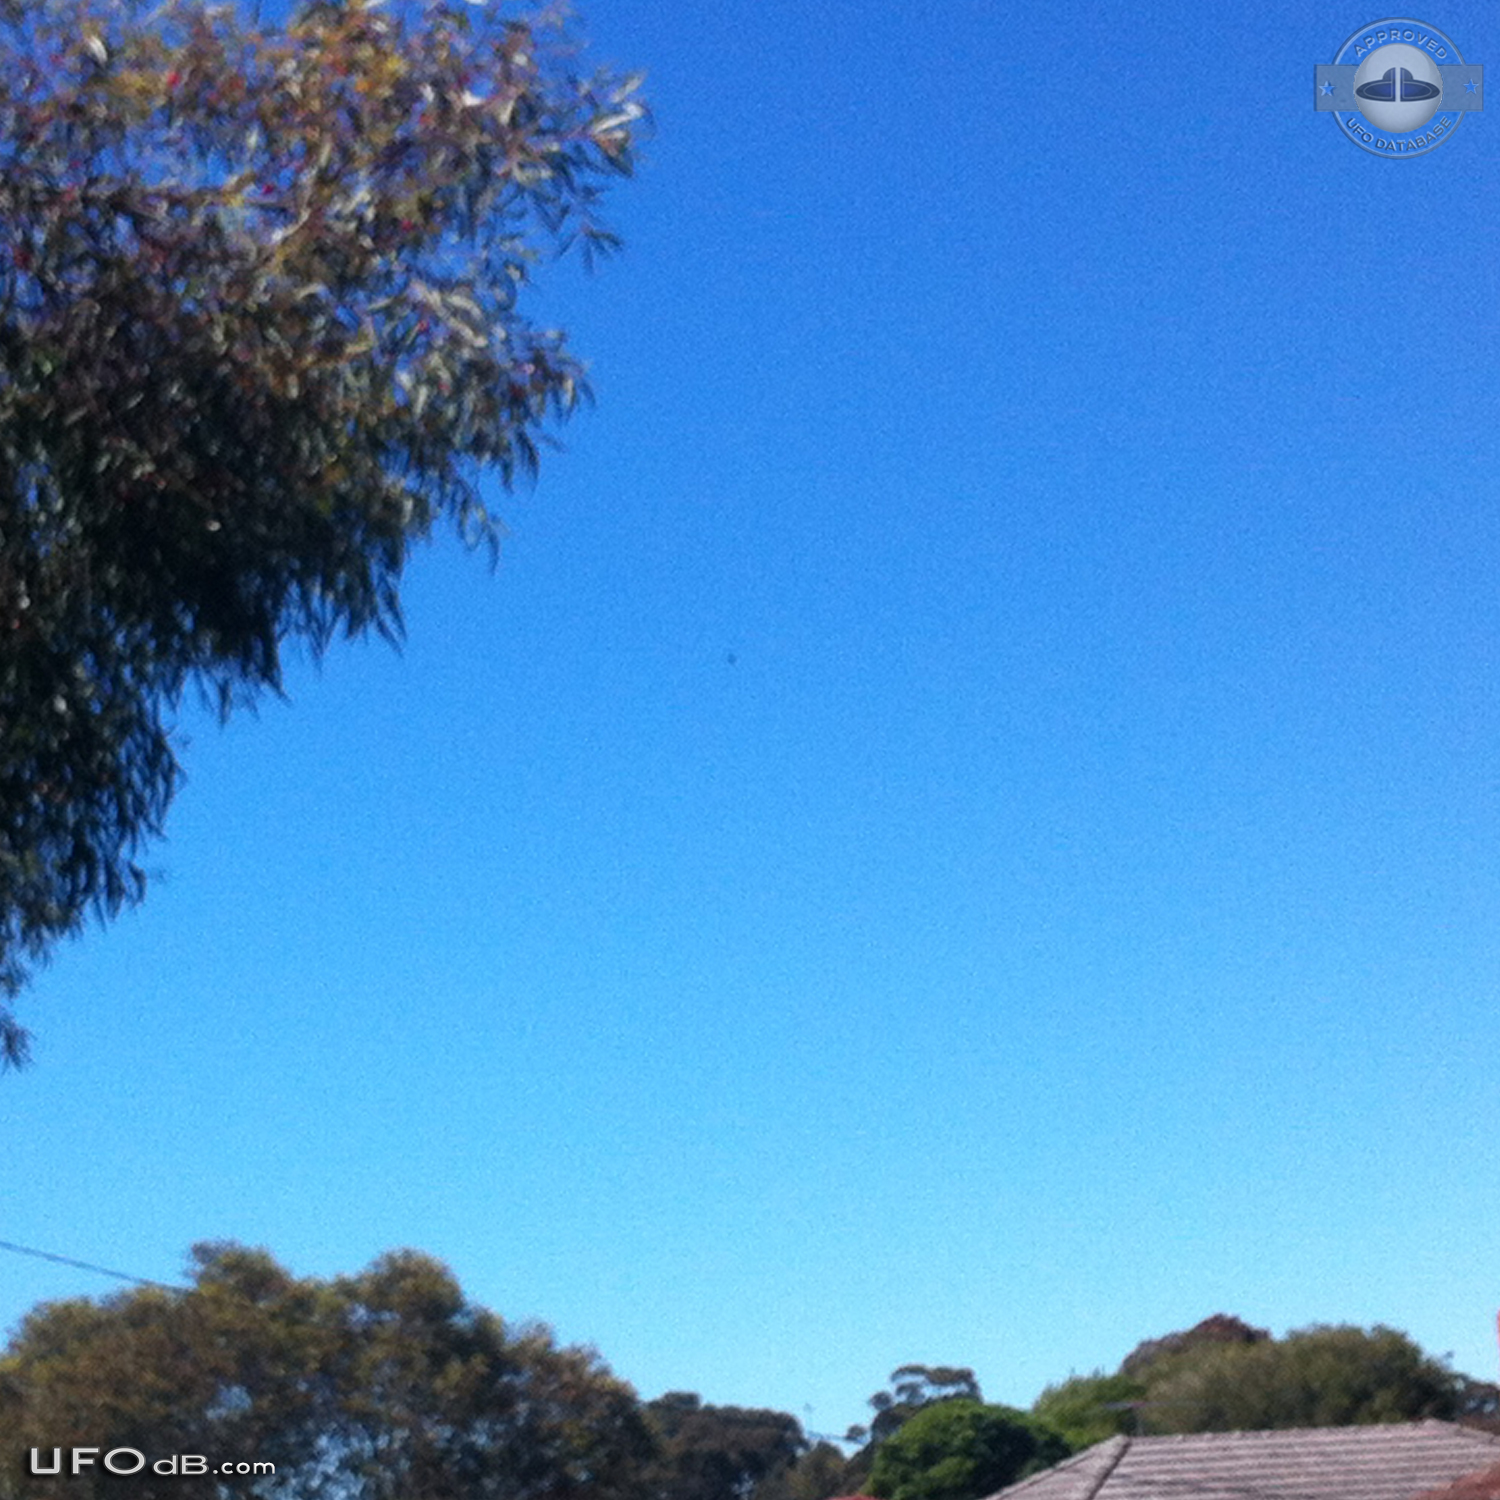 Donut Shaped UFO in blue sky over Blackburn North, Australia in 2012 UFO Picture #575-2